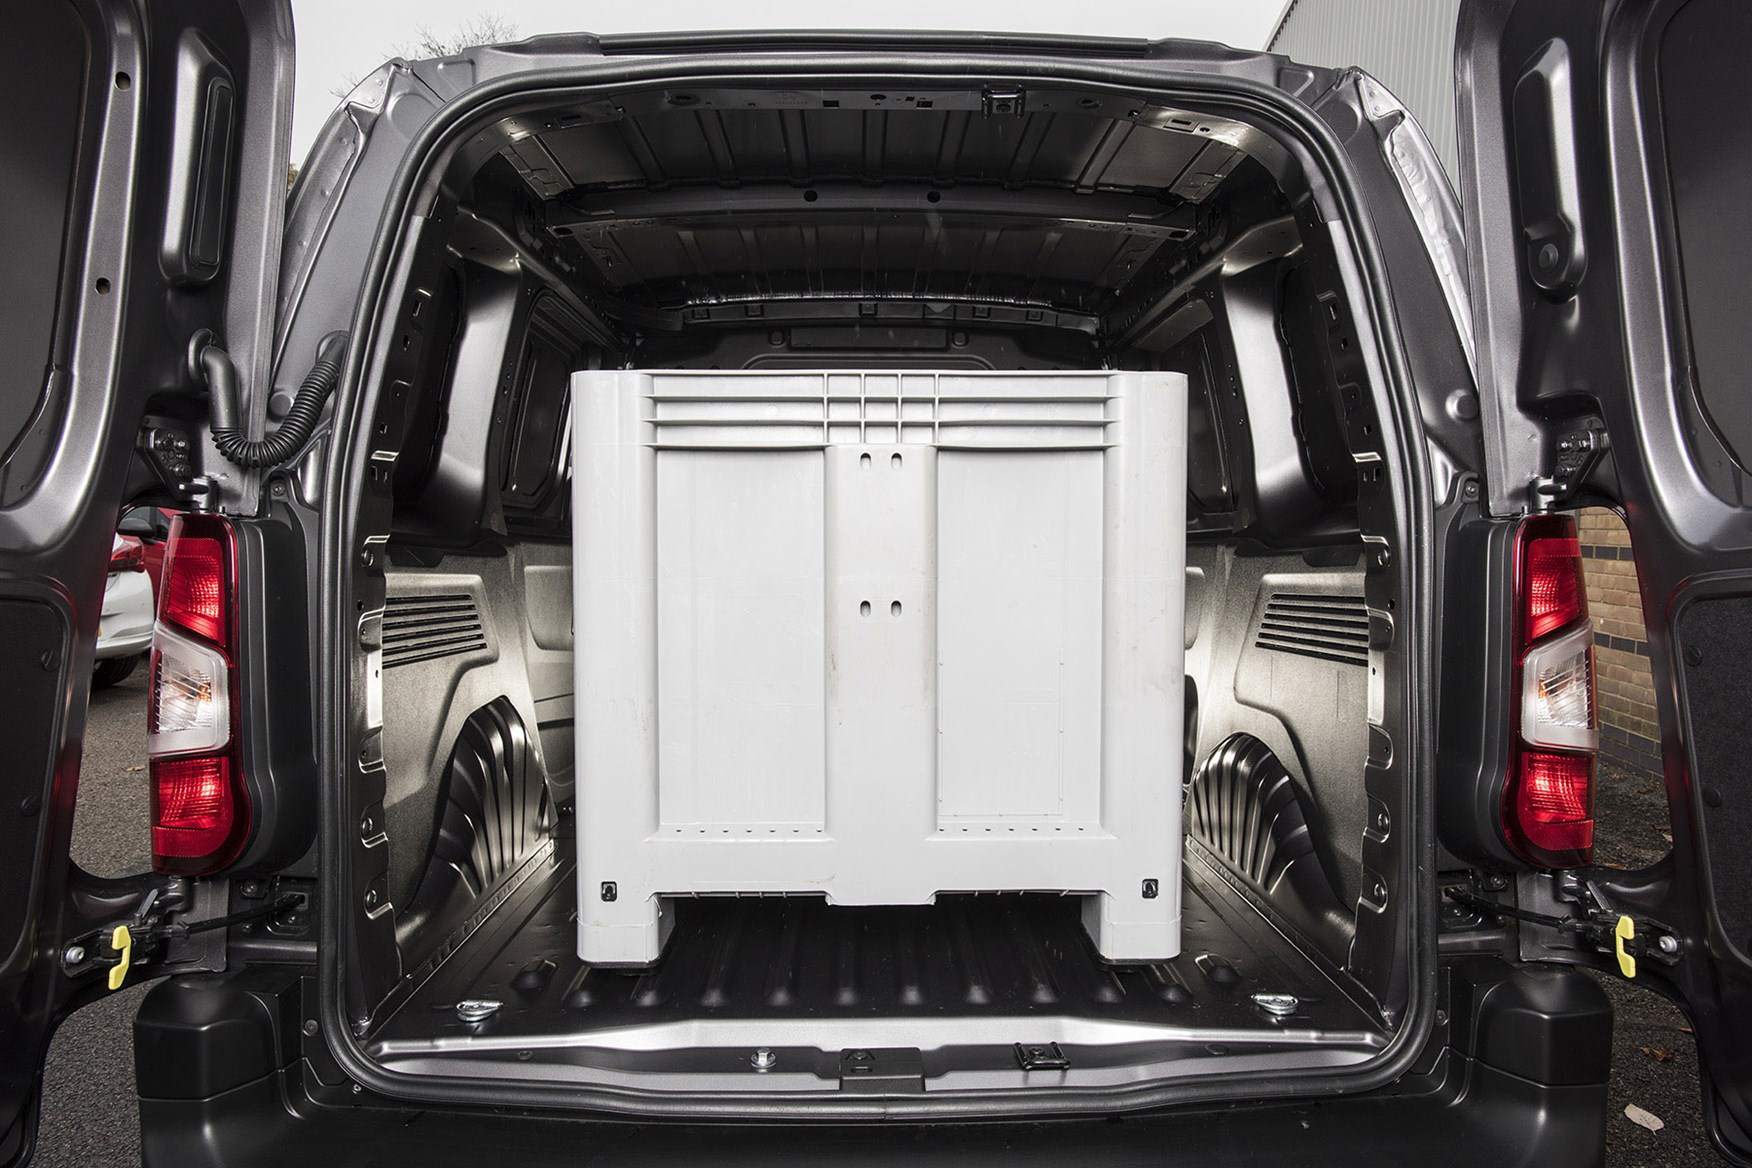 Vauxhall Combo Cargo Van Dimensions 2018 On Capacity